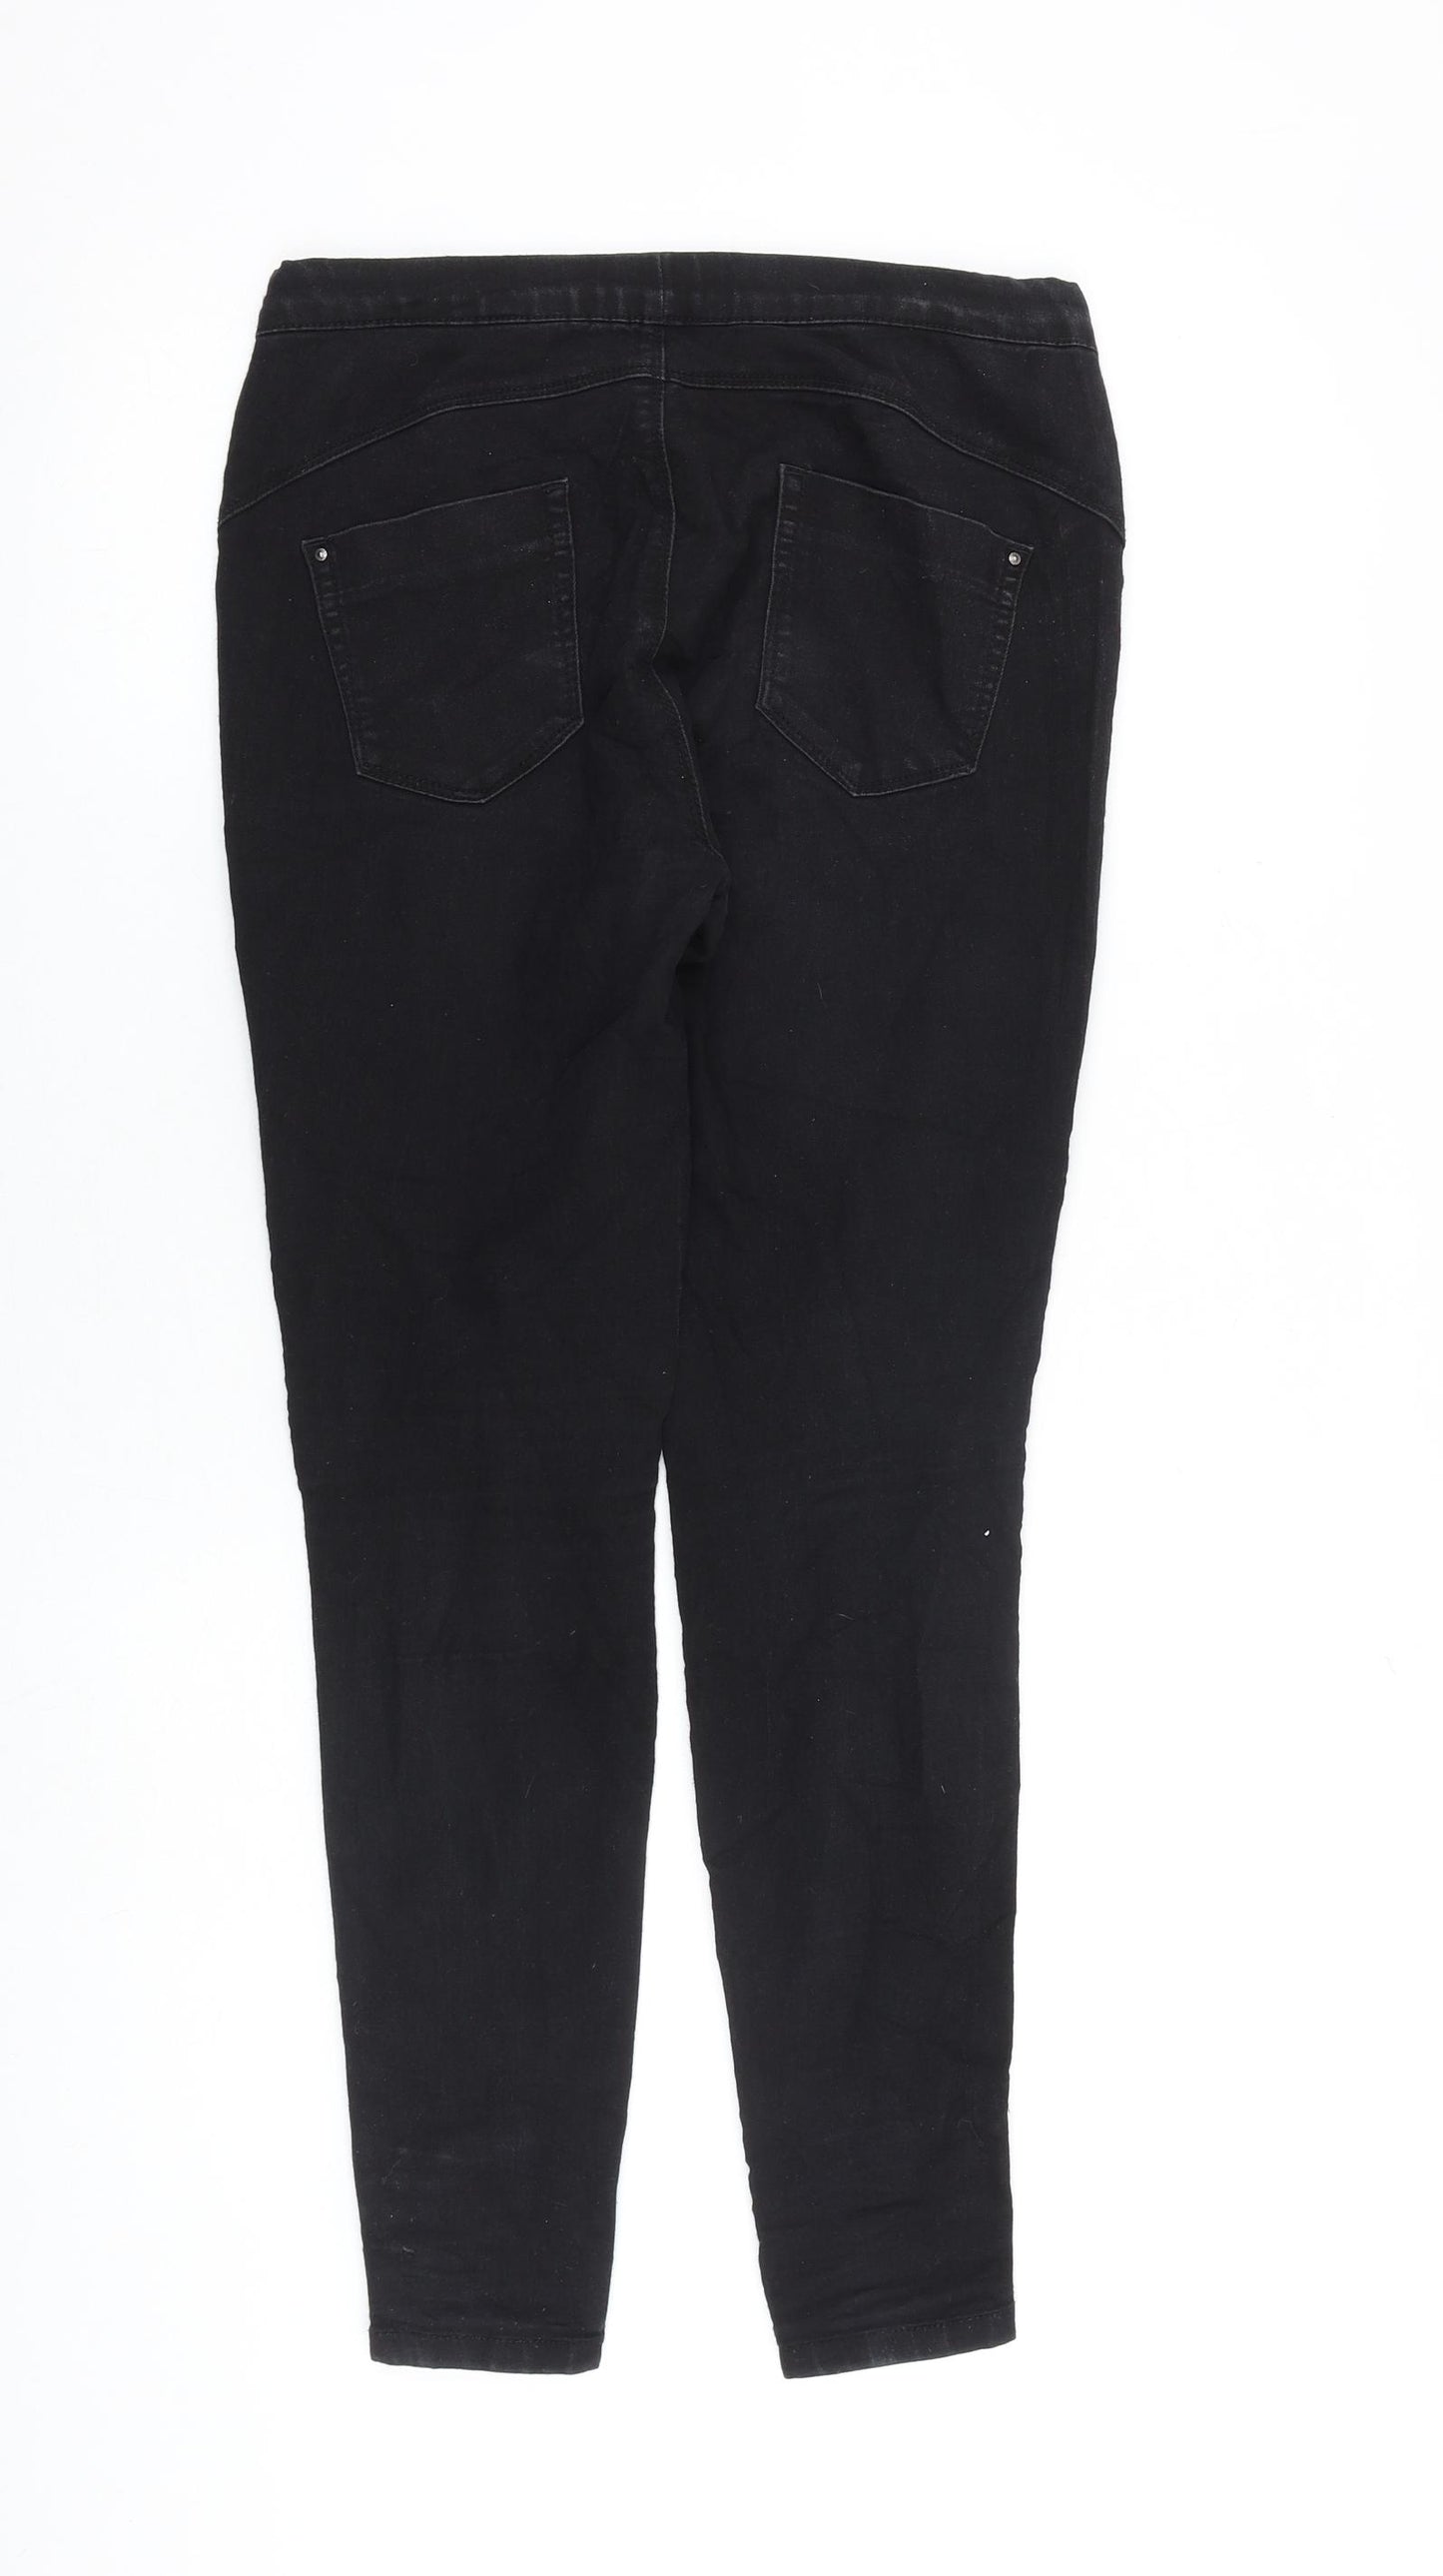 Denim & Co. Womens Black Cotton Jegging Jeans Size 10 L29 in Regular